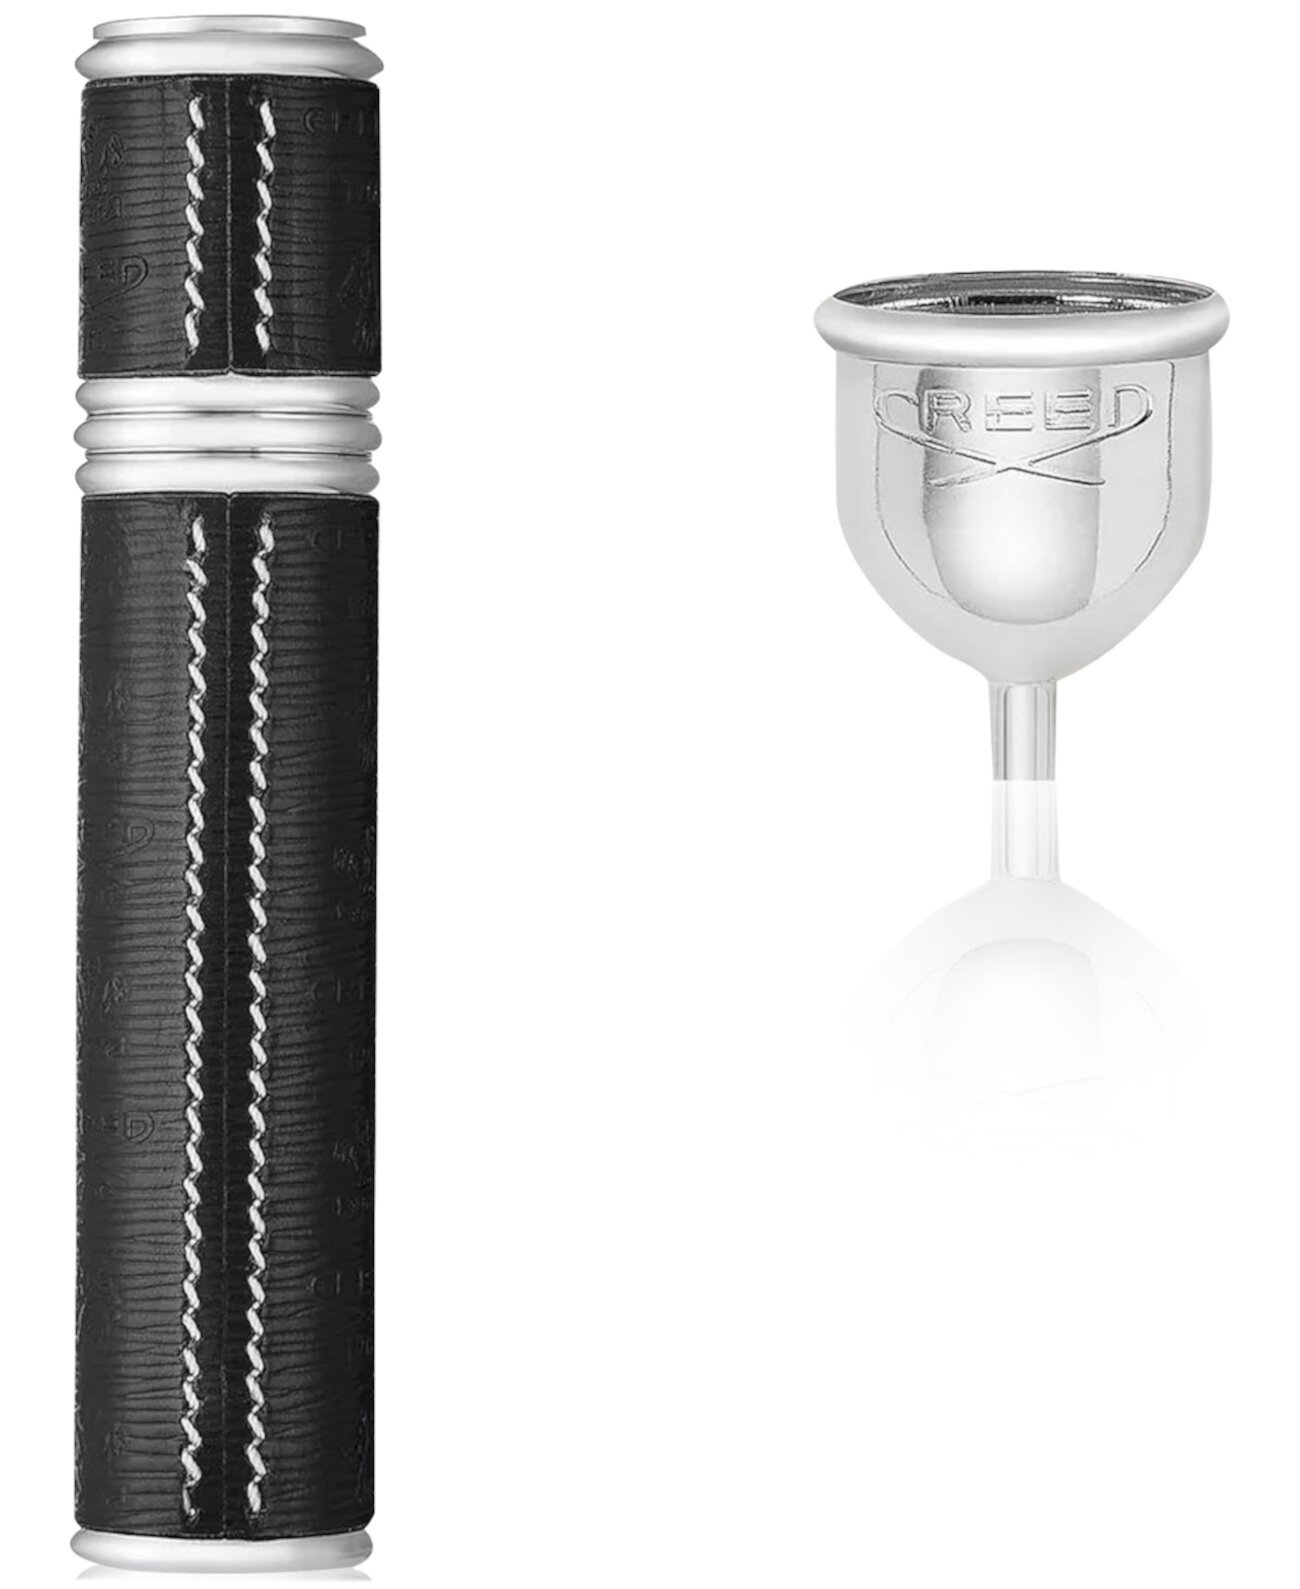 Refillable Travel Perfume Atomizer - Black/Silver, 1.7 oz. Creed